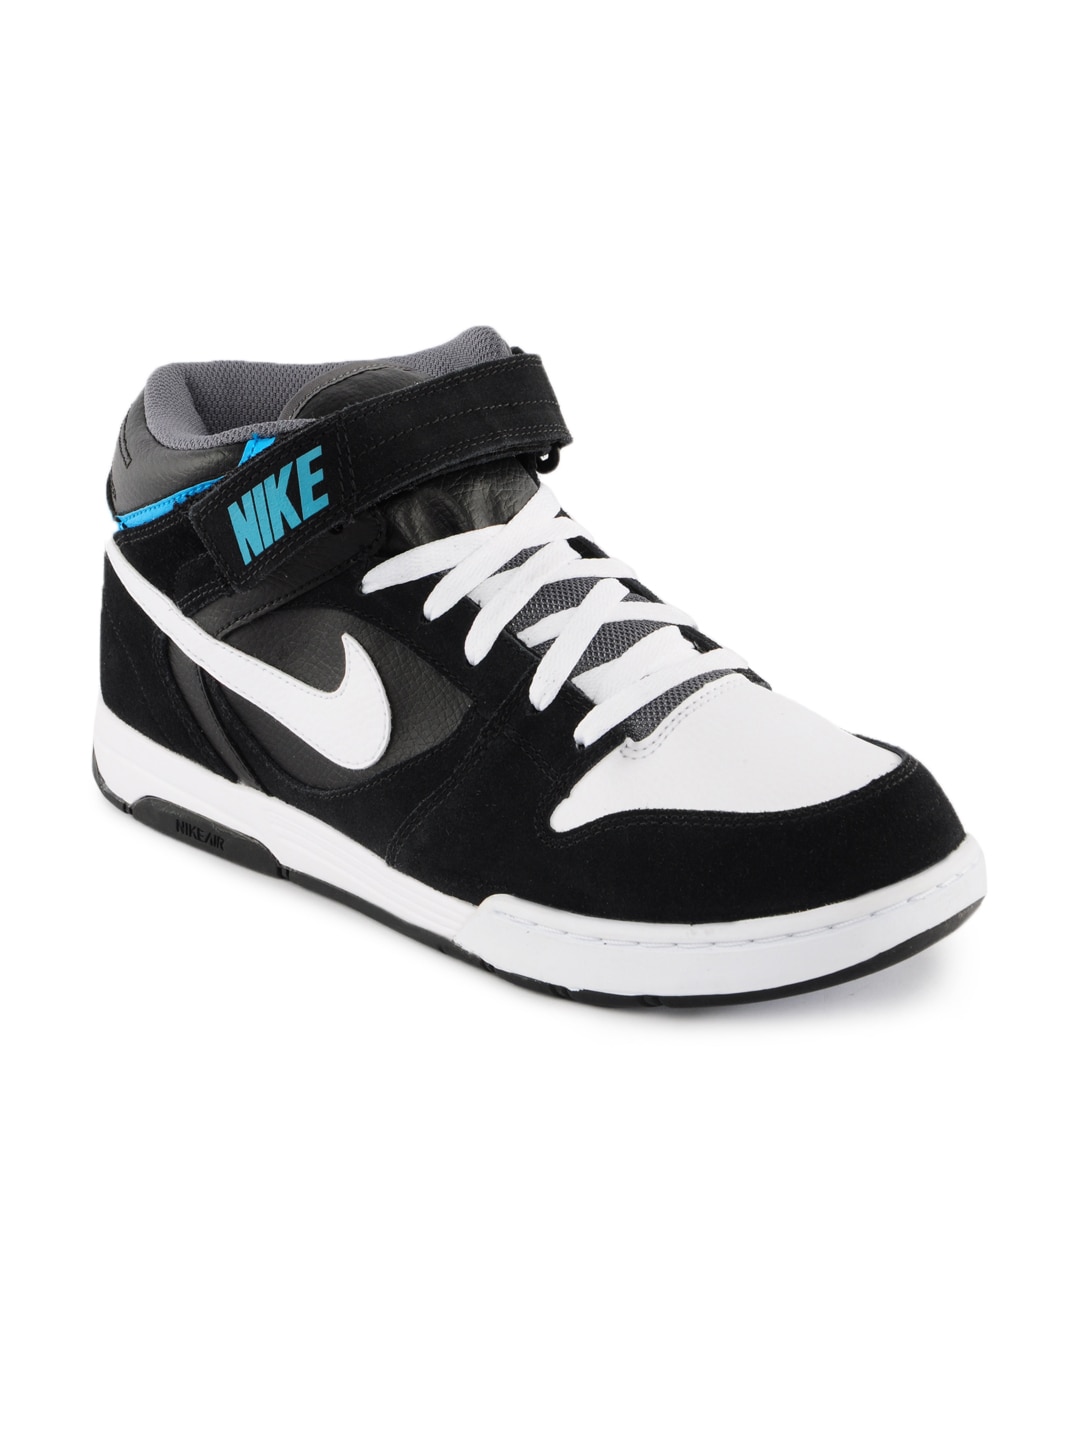 Nike Men Air Twilight Black Shoes